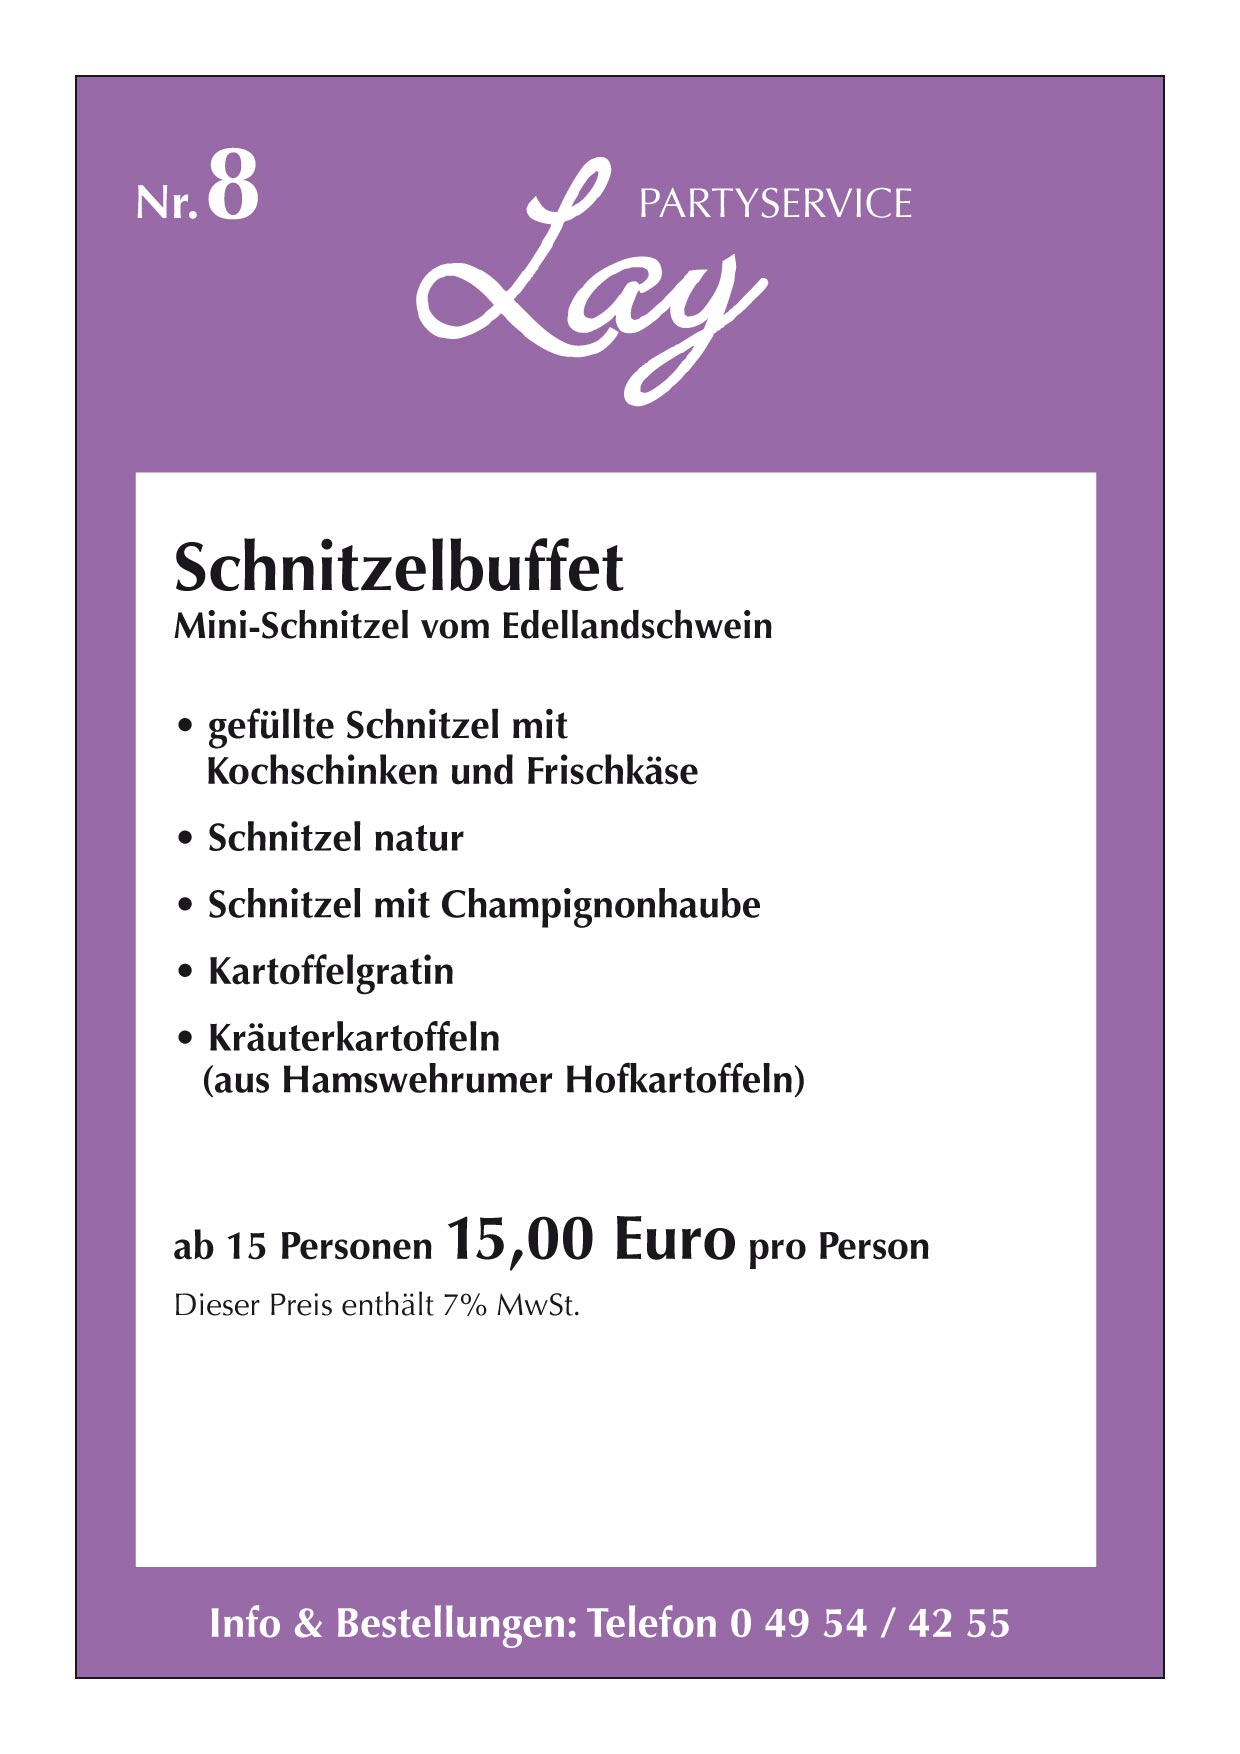 LAY Partyservice Schnitzelbuffet